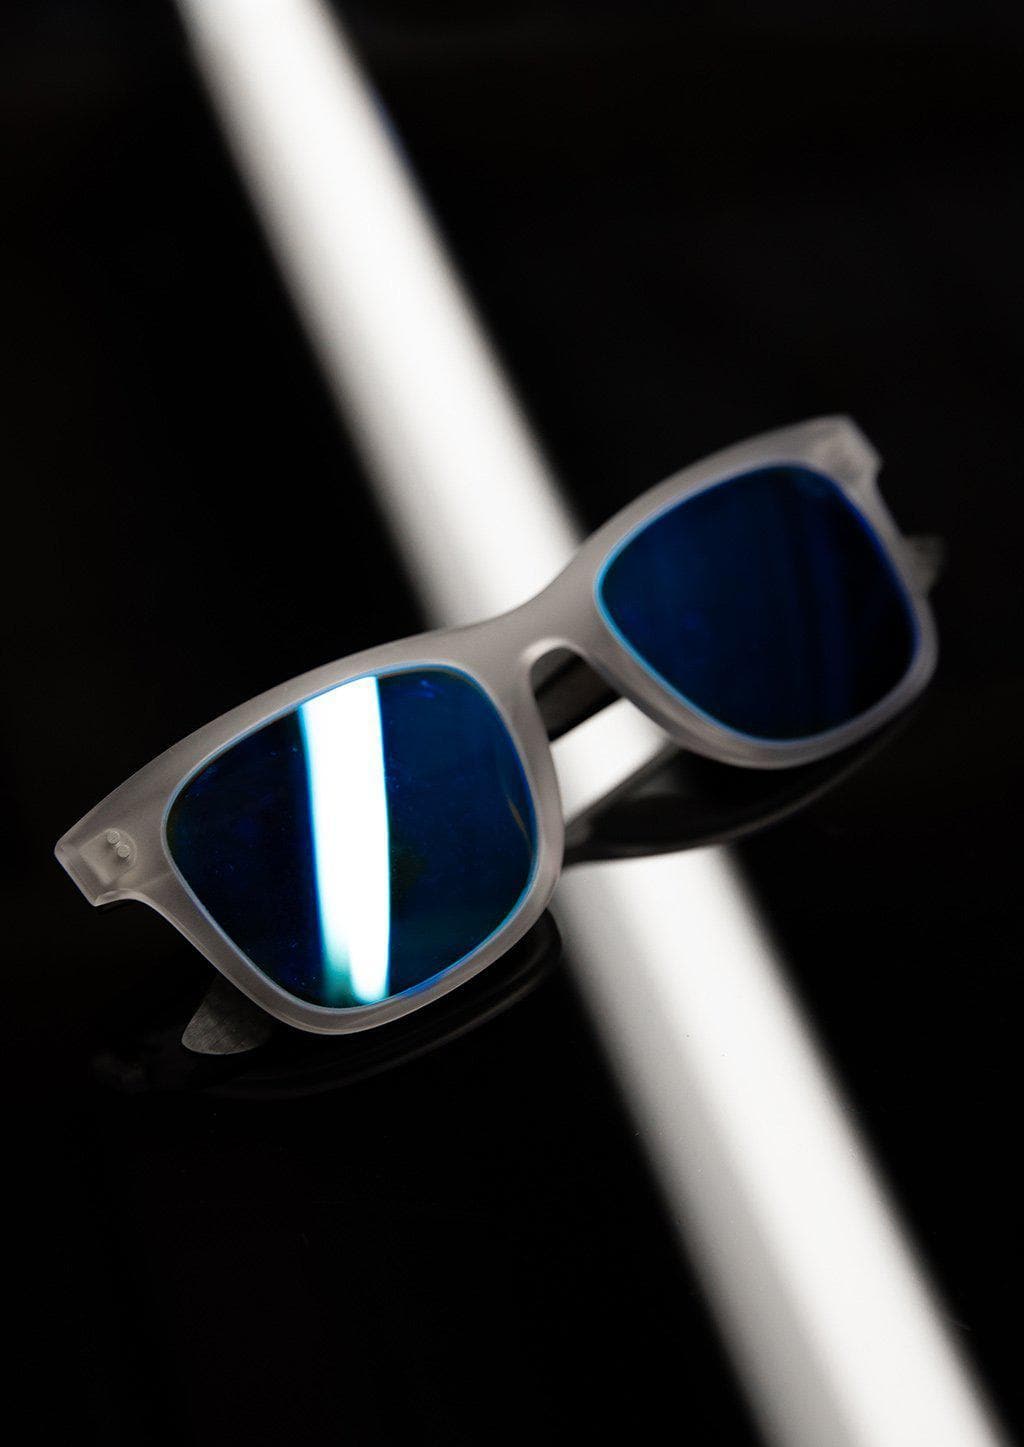 Hybrid - Atom - Carbon Fiber & Acetate Sunglasses